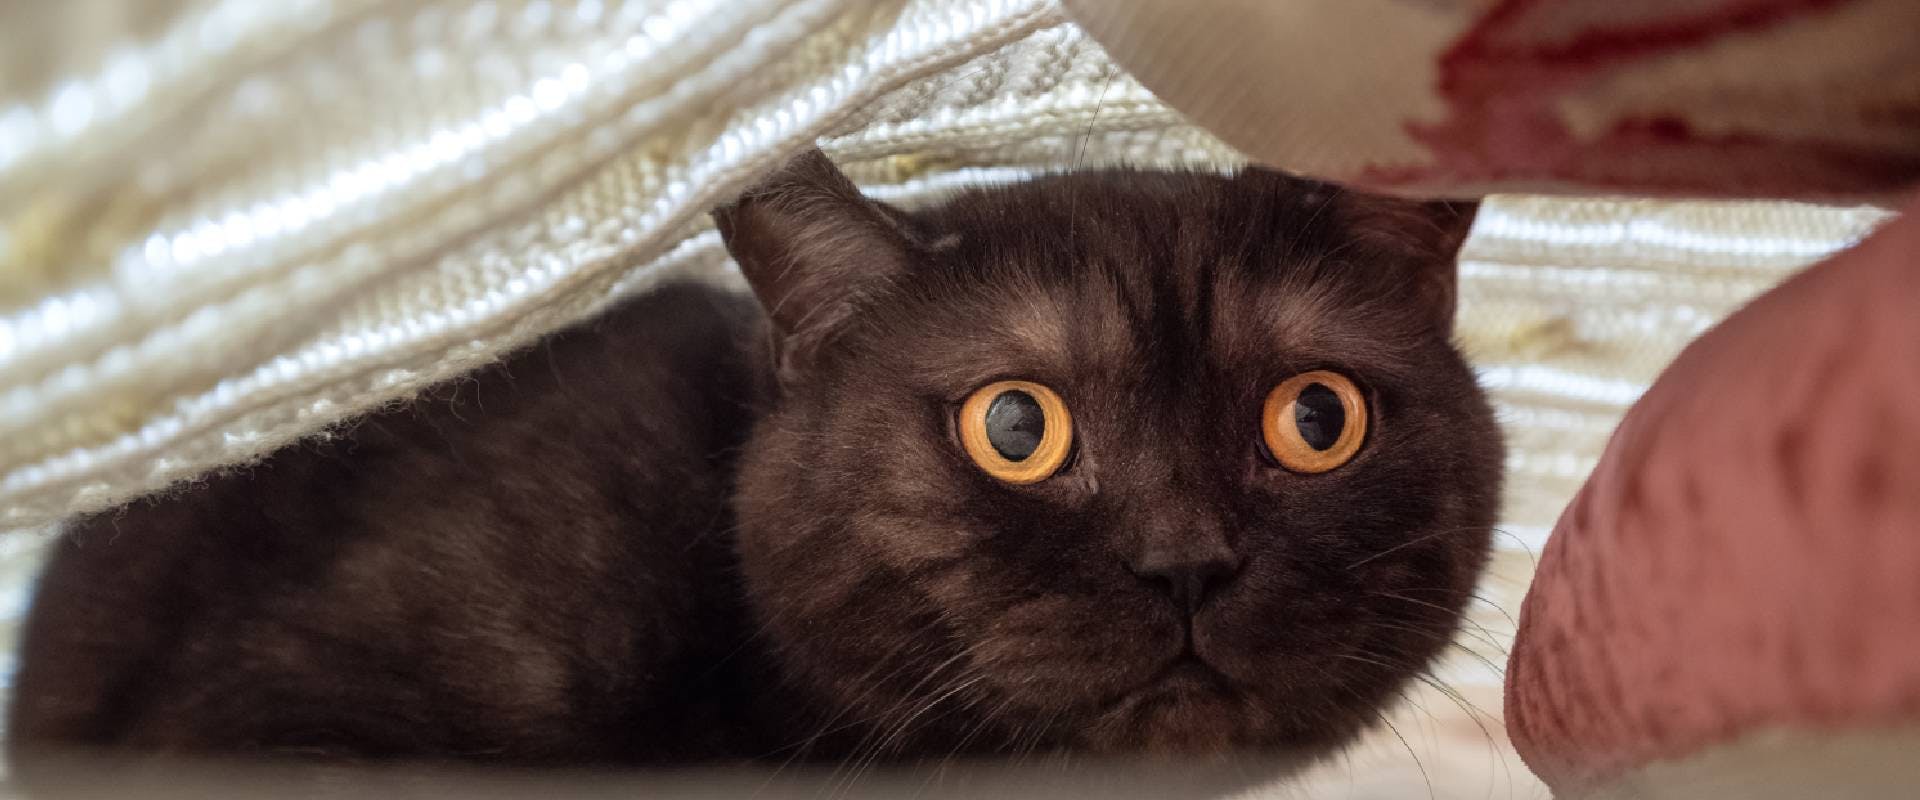 Cat hiding under a blanket